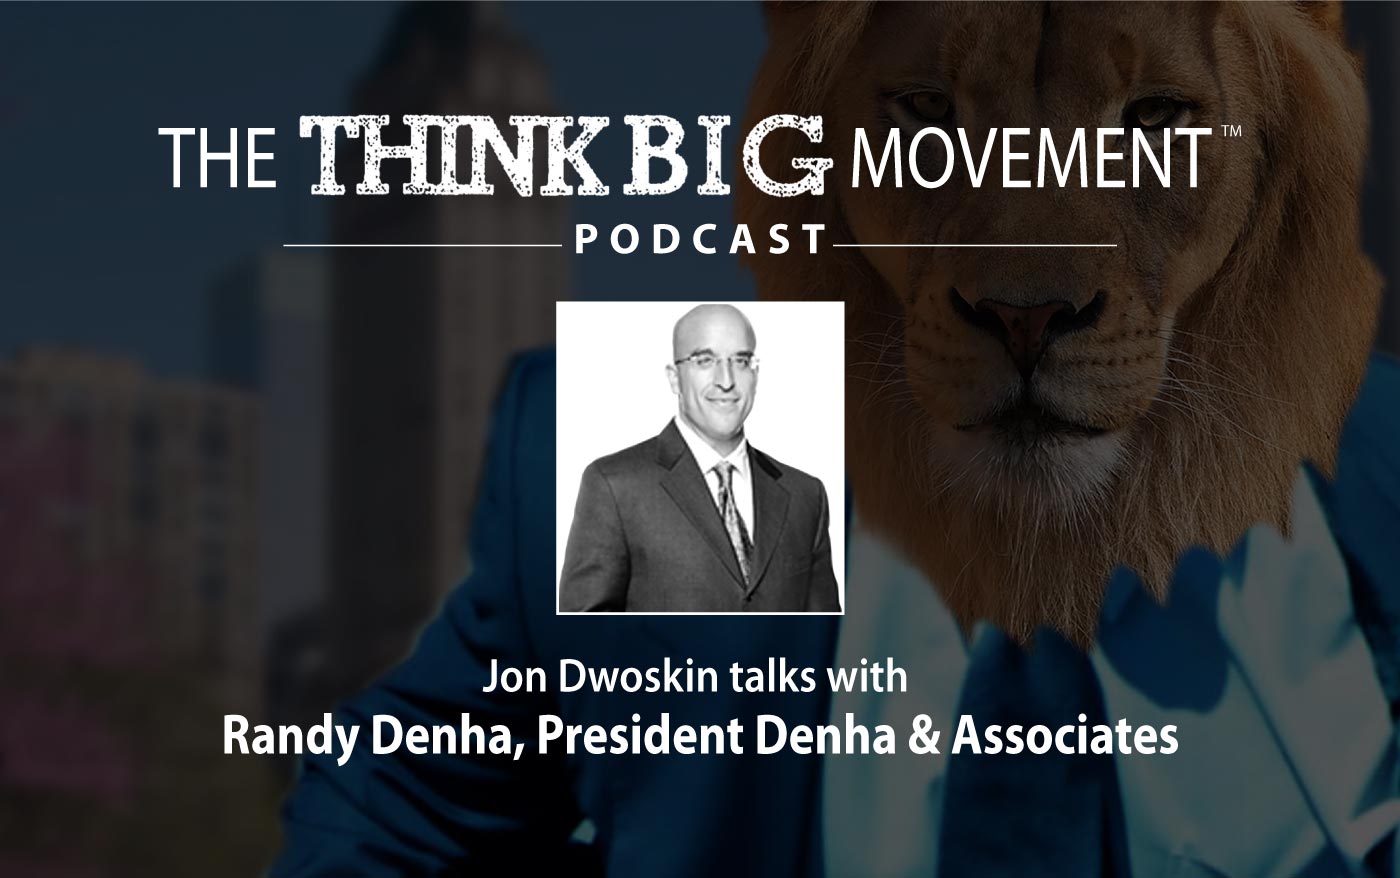 Think Big Movement Podcast - Jon Dwoskin Interviews Randall Denha, President of Denha & Associates